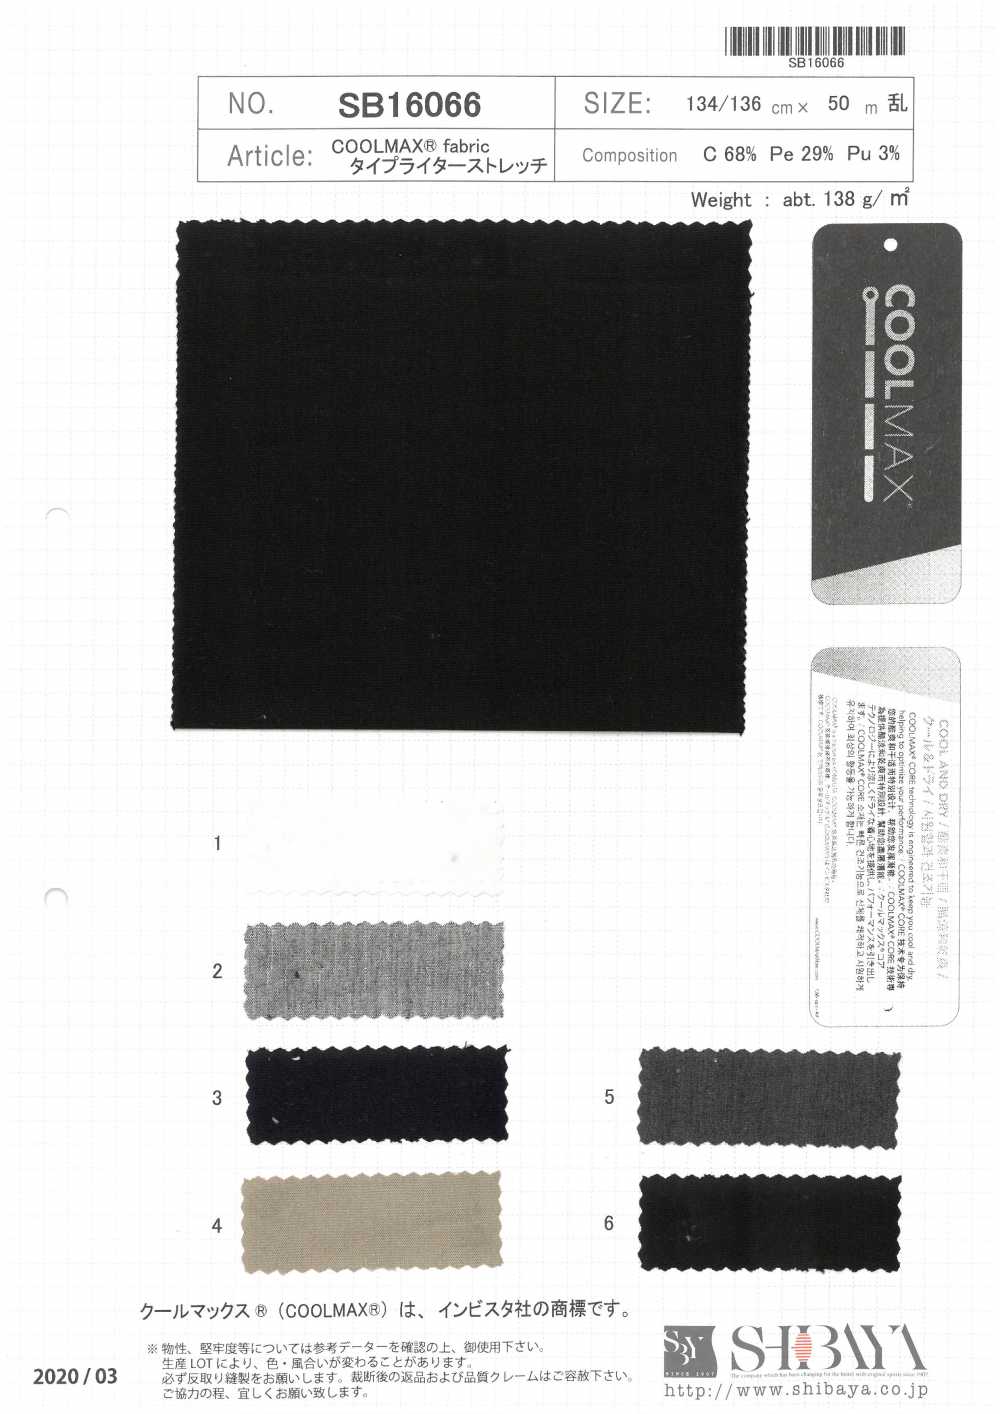 SB16066 COOLMAX® Vải Vải Cotton Typewritter Co Giãn SHIBAYA